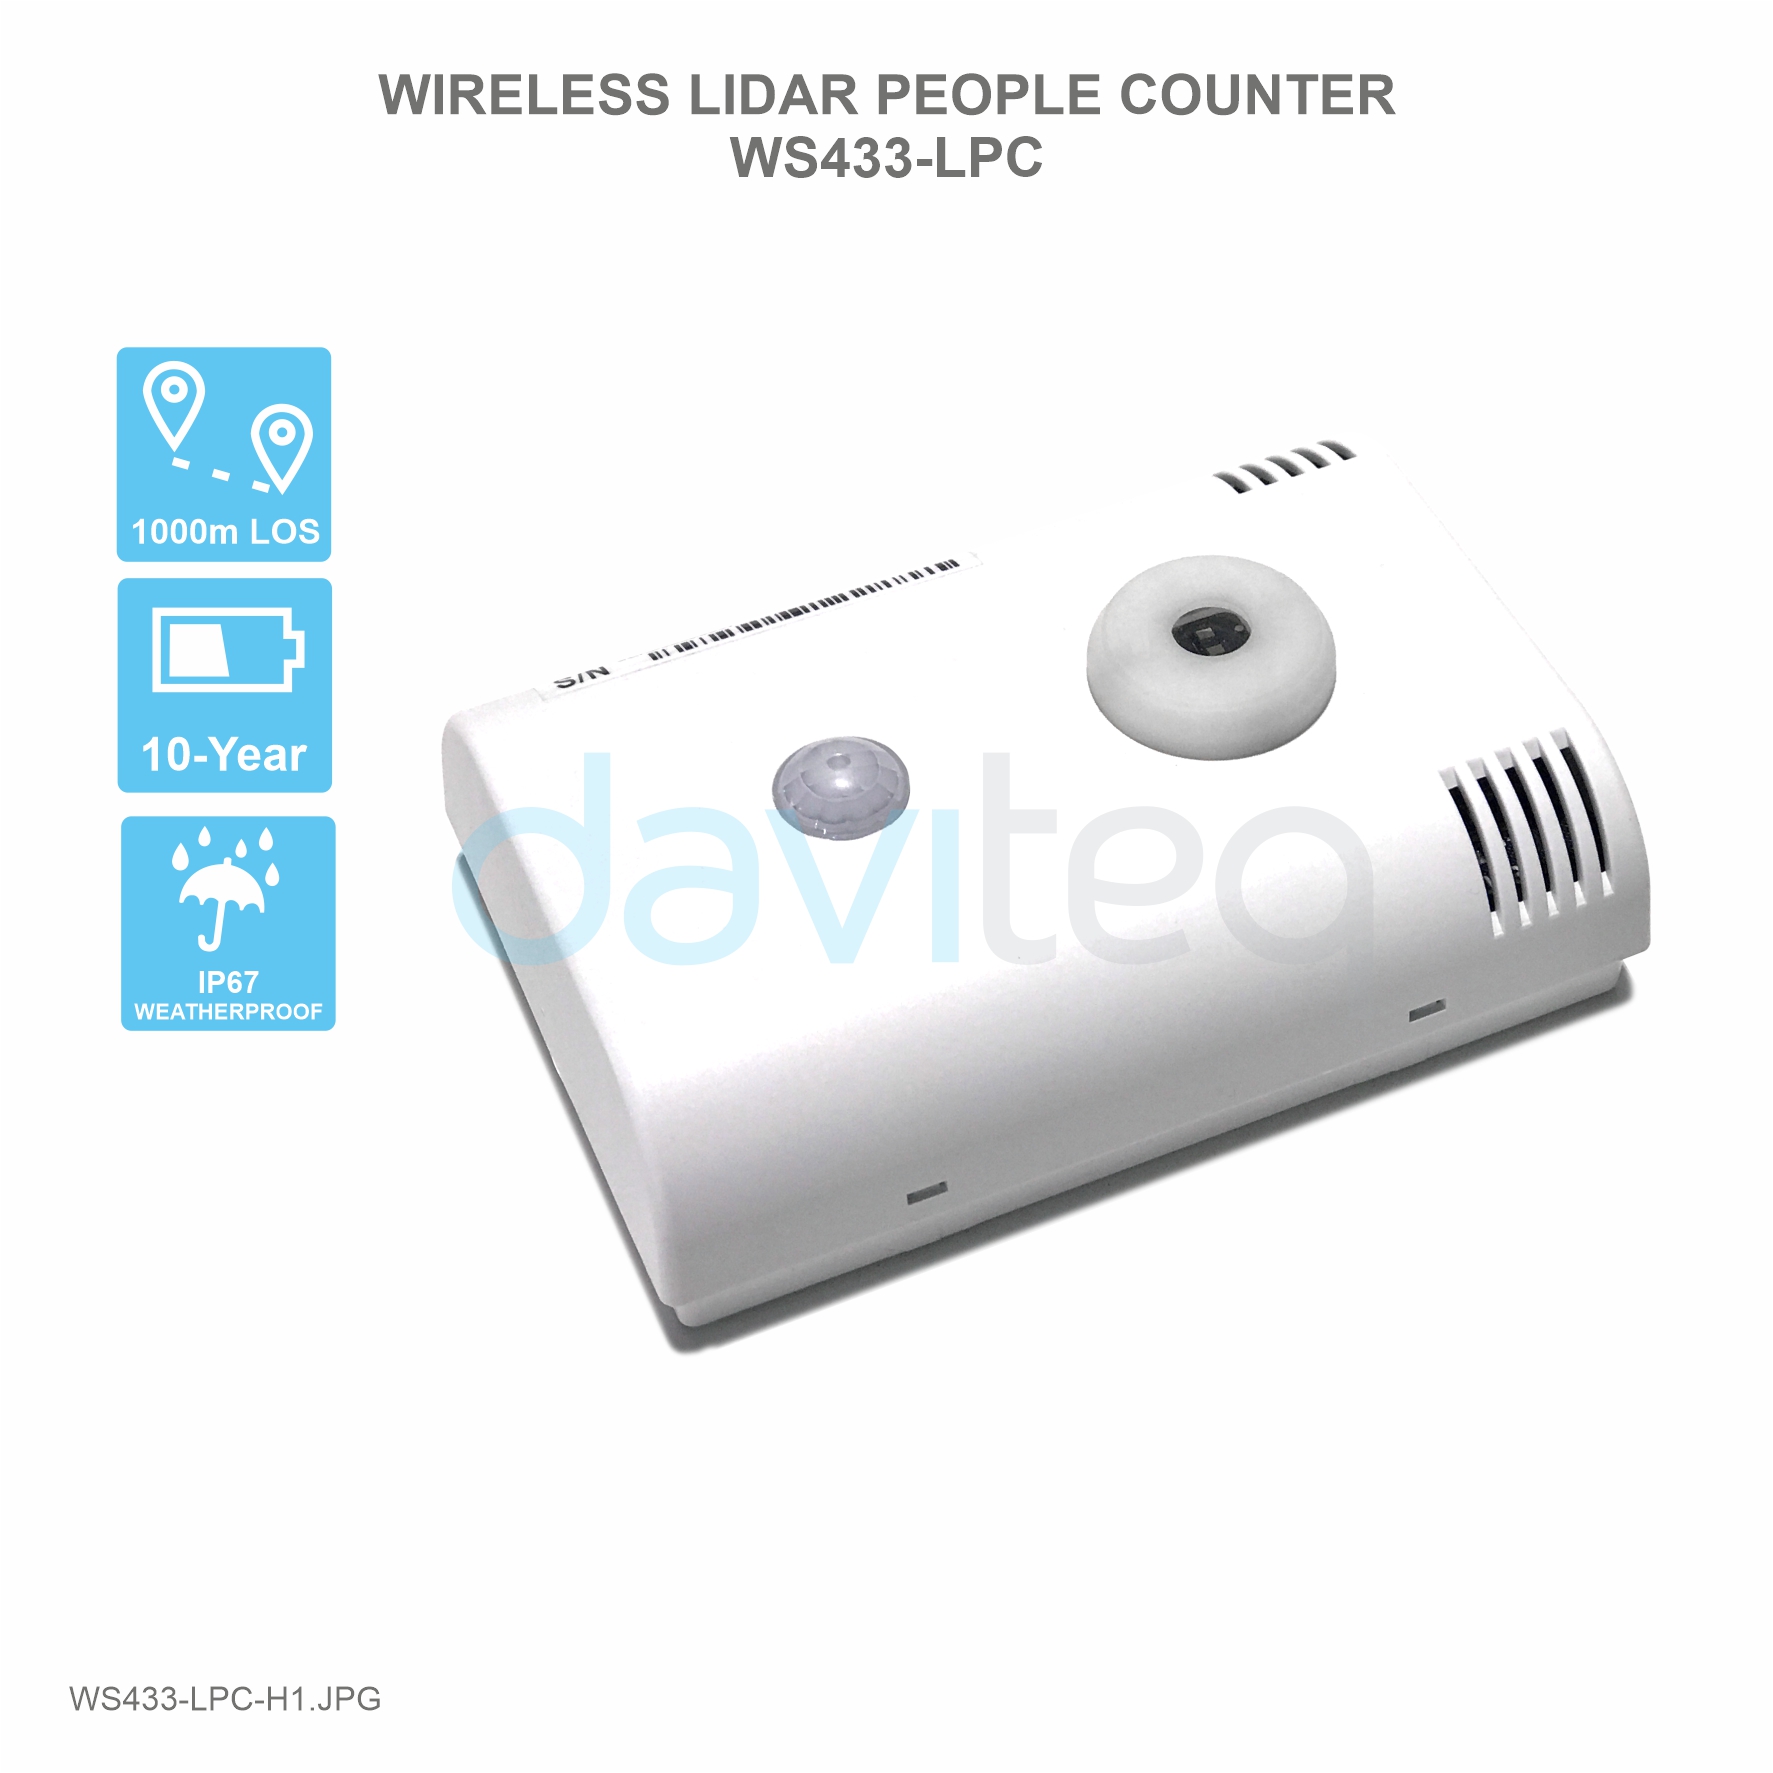 Wireless Lidar People Counter